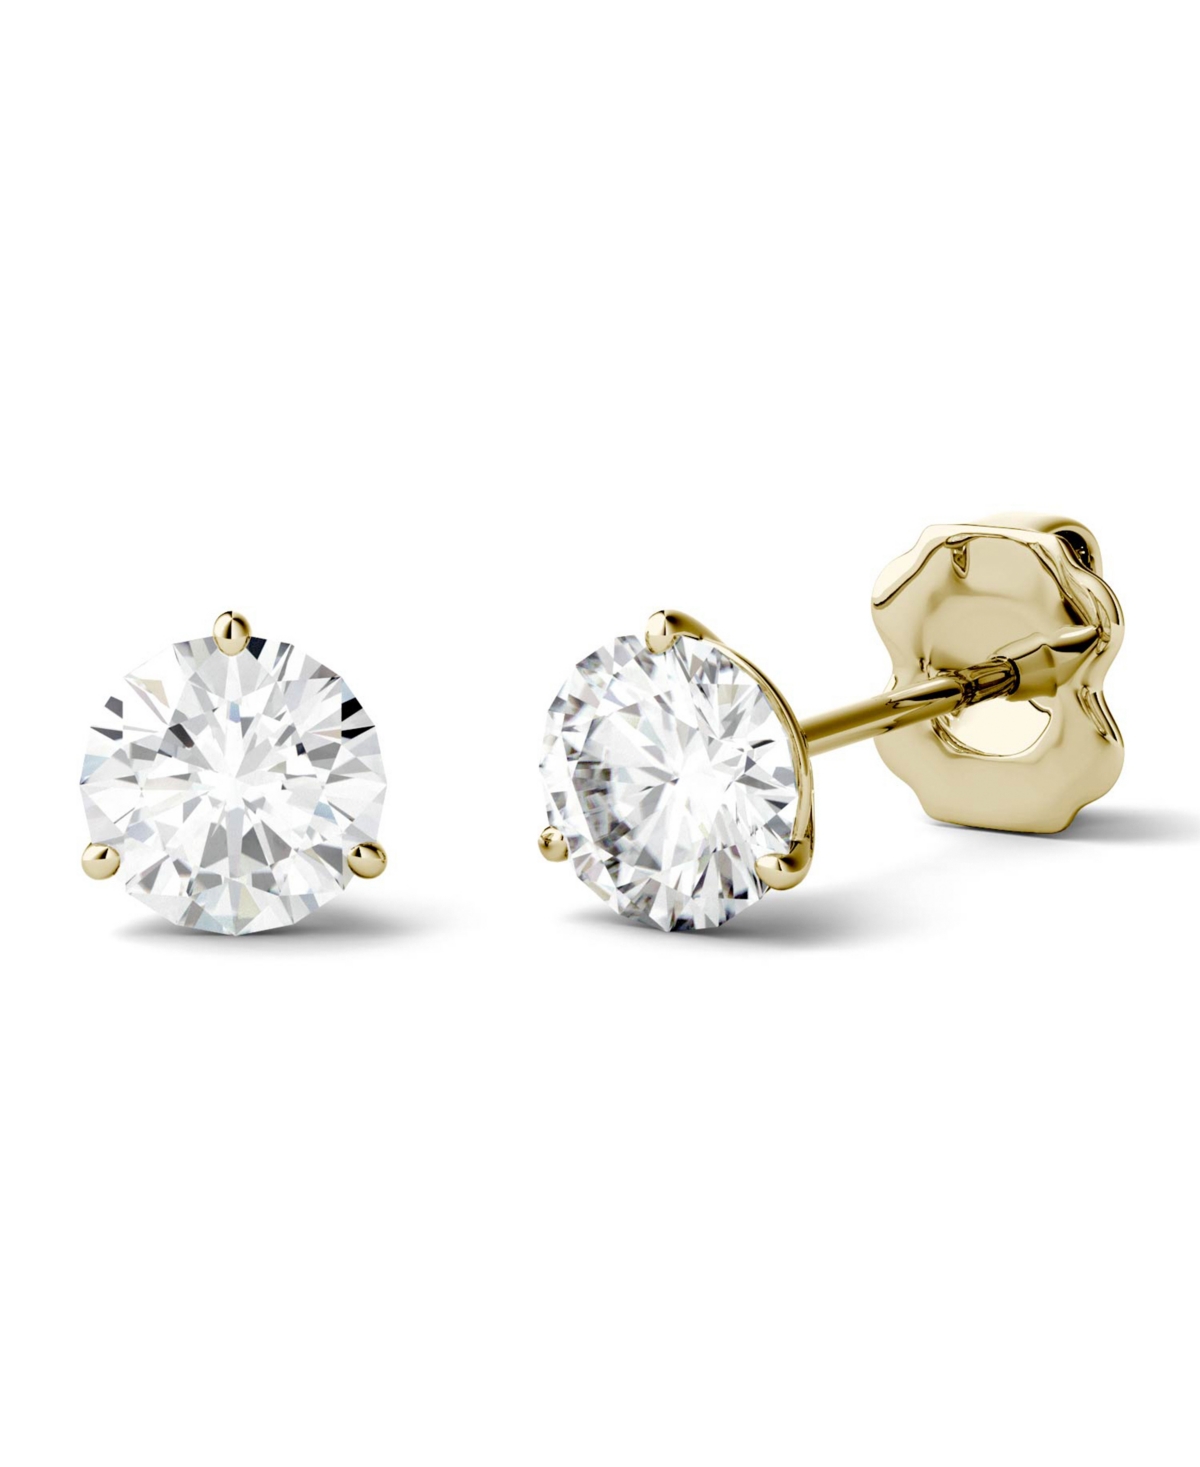 Charles & Colvard Moissanite Martini Stud Earrings (1 ct. t.w. Diamond Equivalent) in 14k white or yellow gold